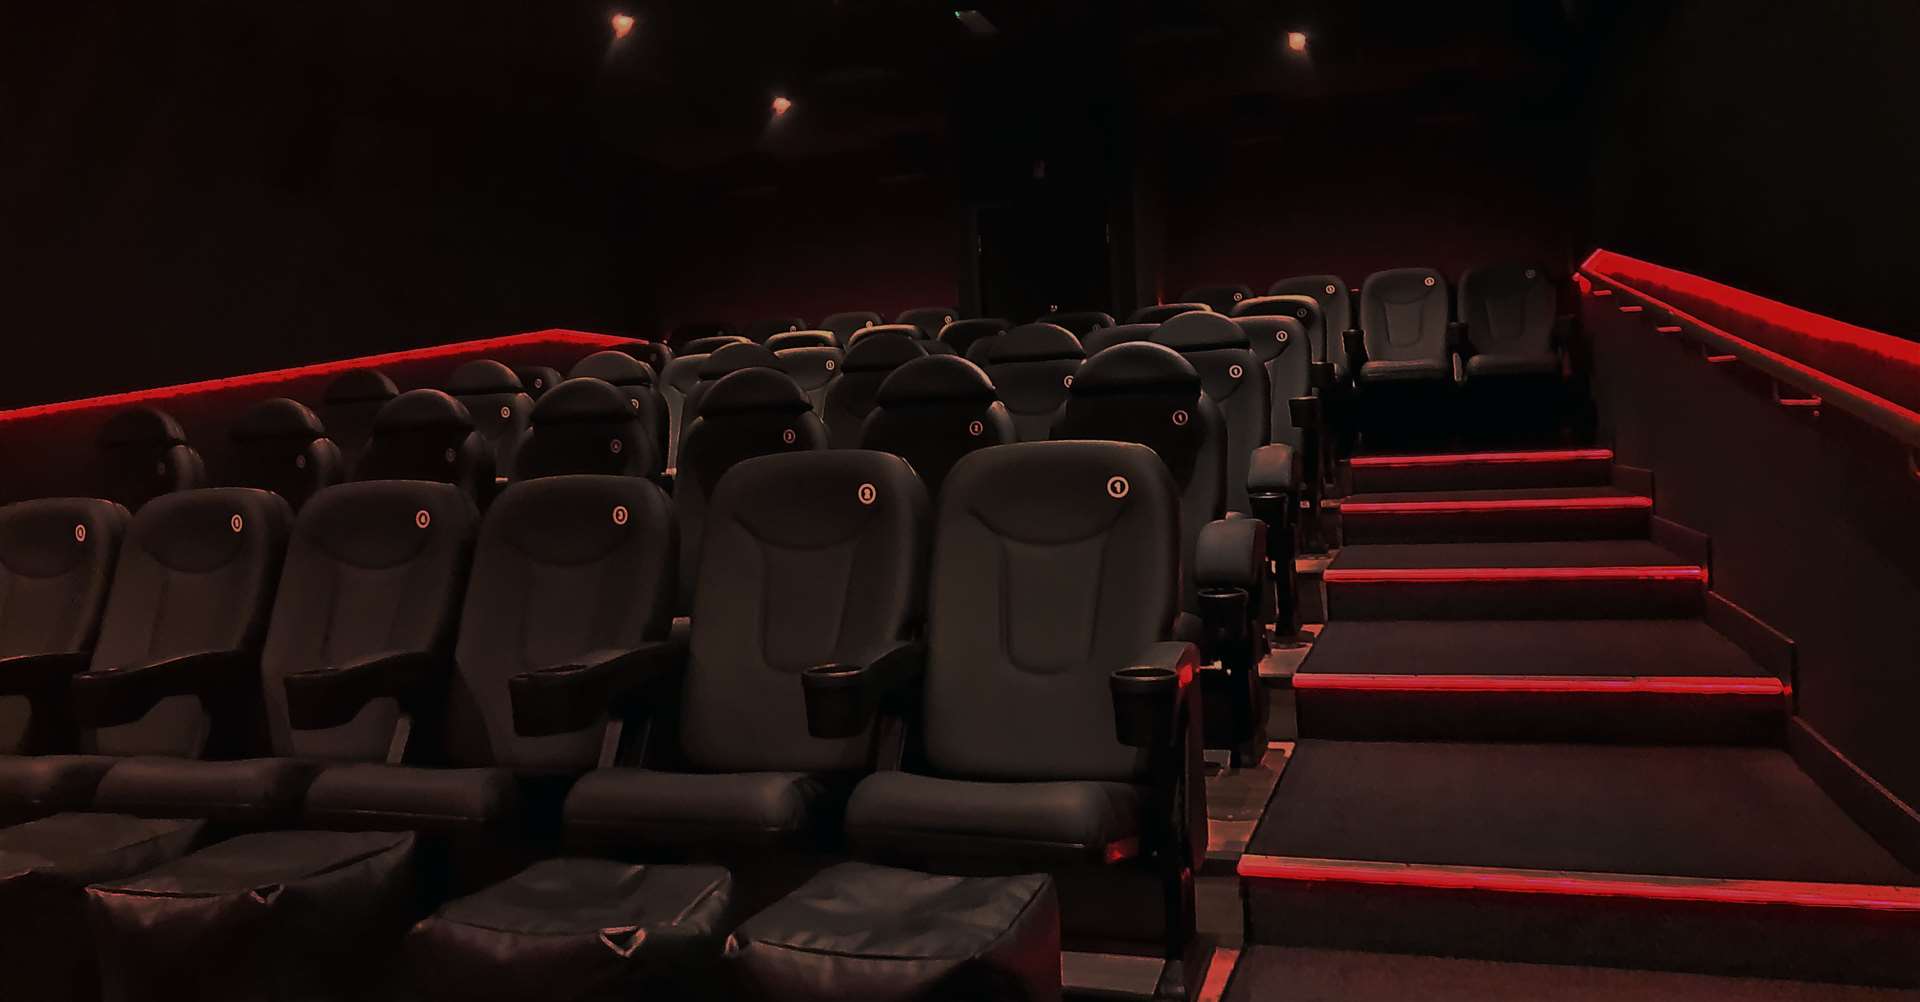 The cinema has 46 seats